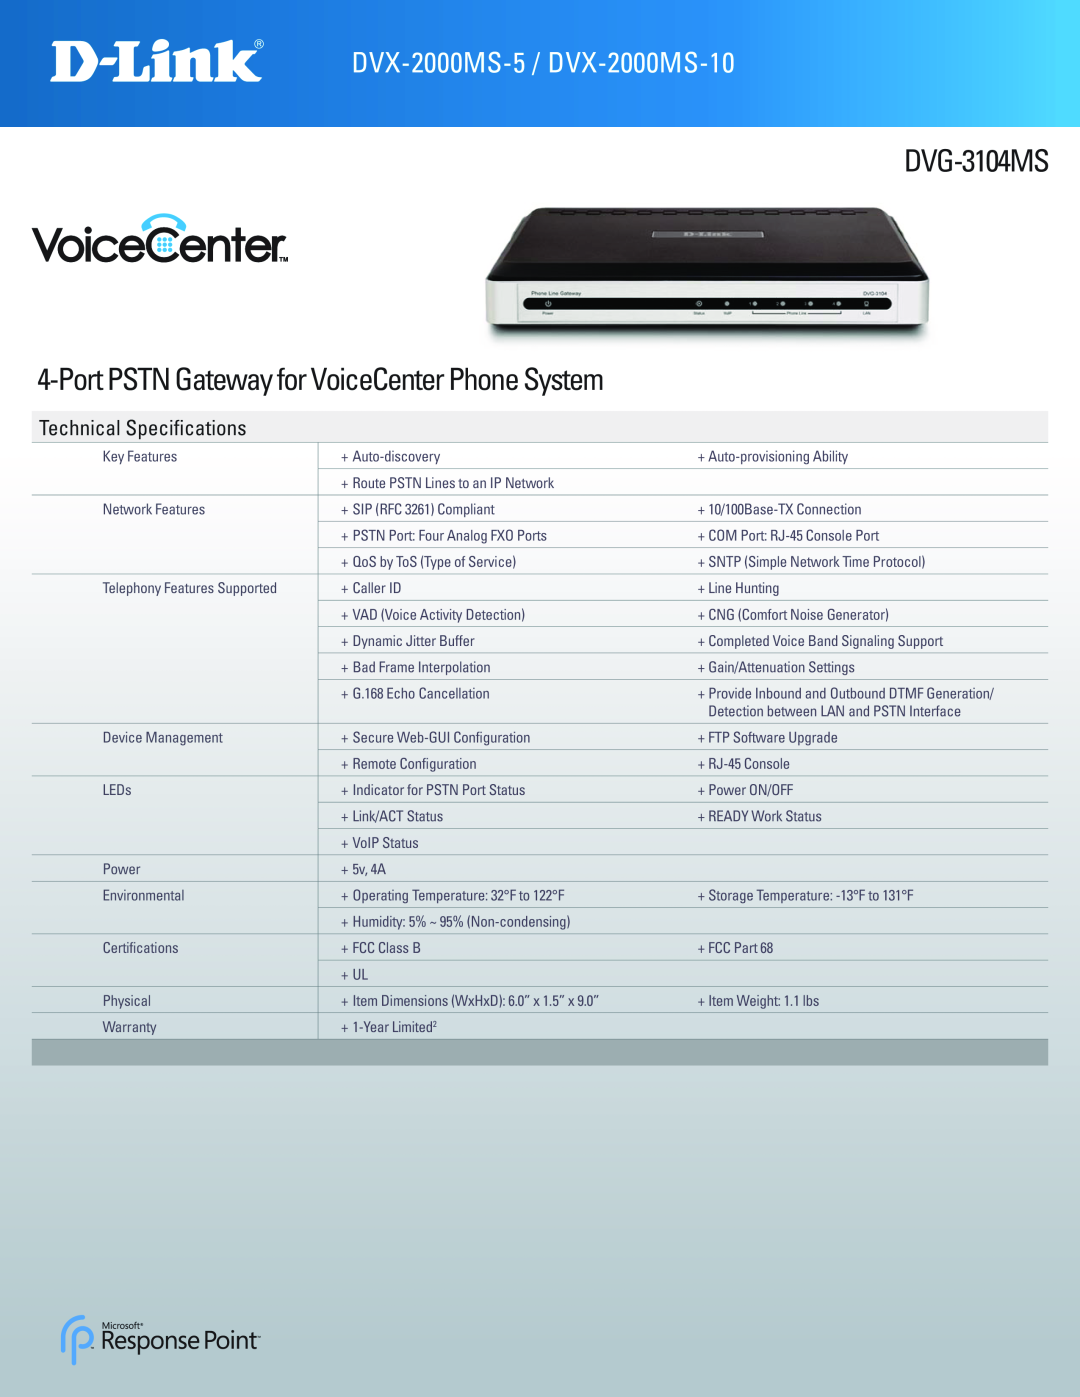 D-Link manual DVG-3104MS 4-Port PSTN Gateway for VoiceCenter Phone System, DVX-2000MS-5 / DVX-2000MS-10 